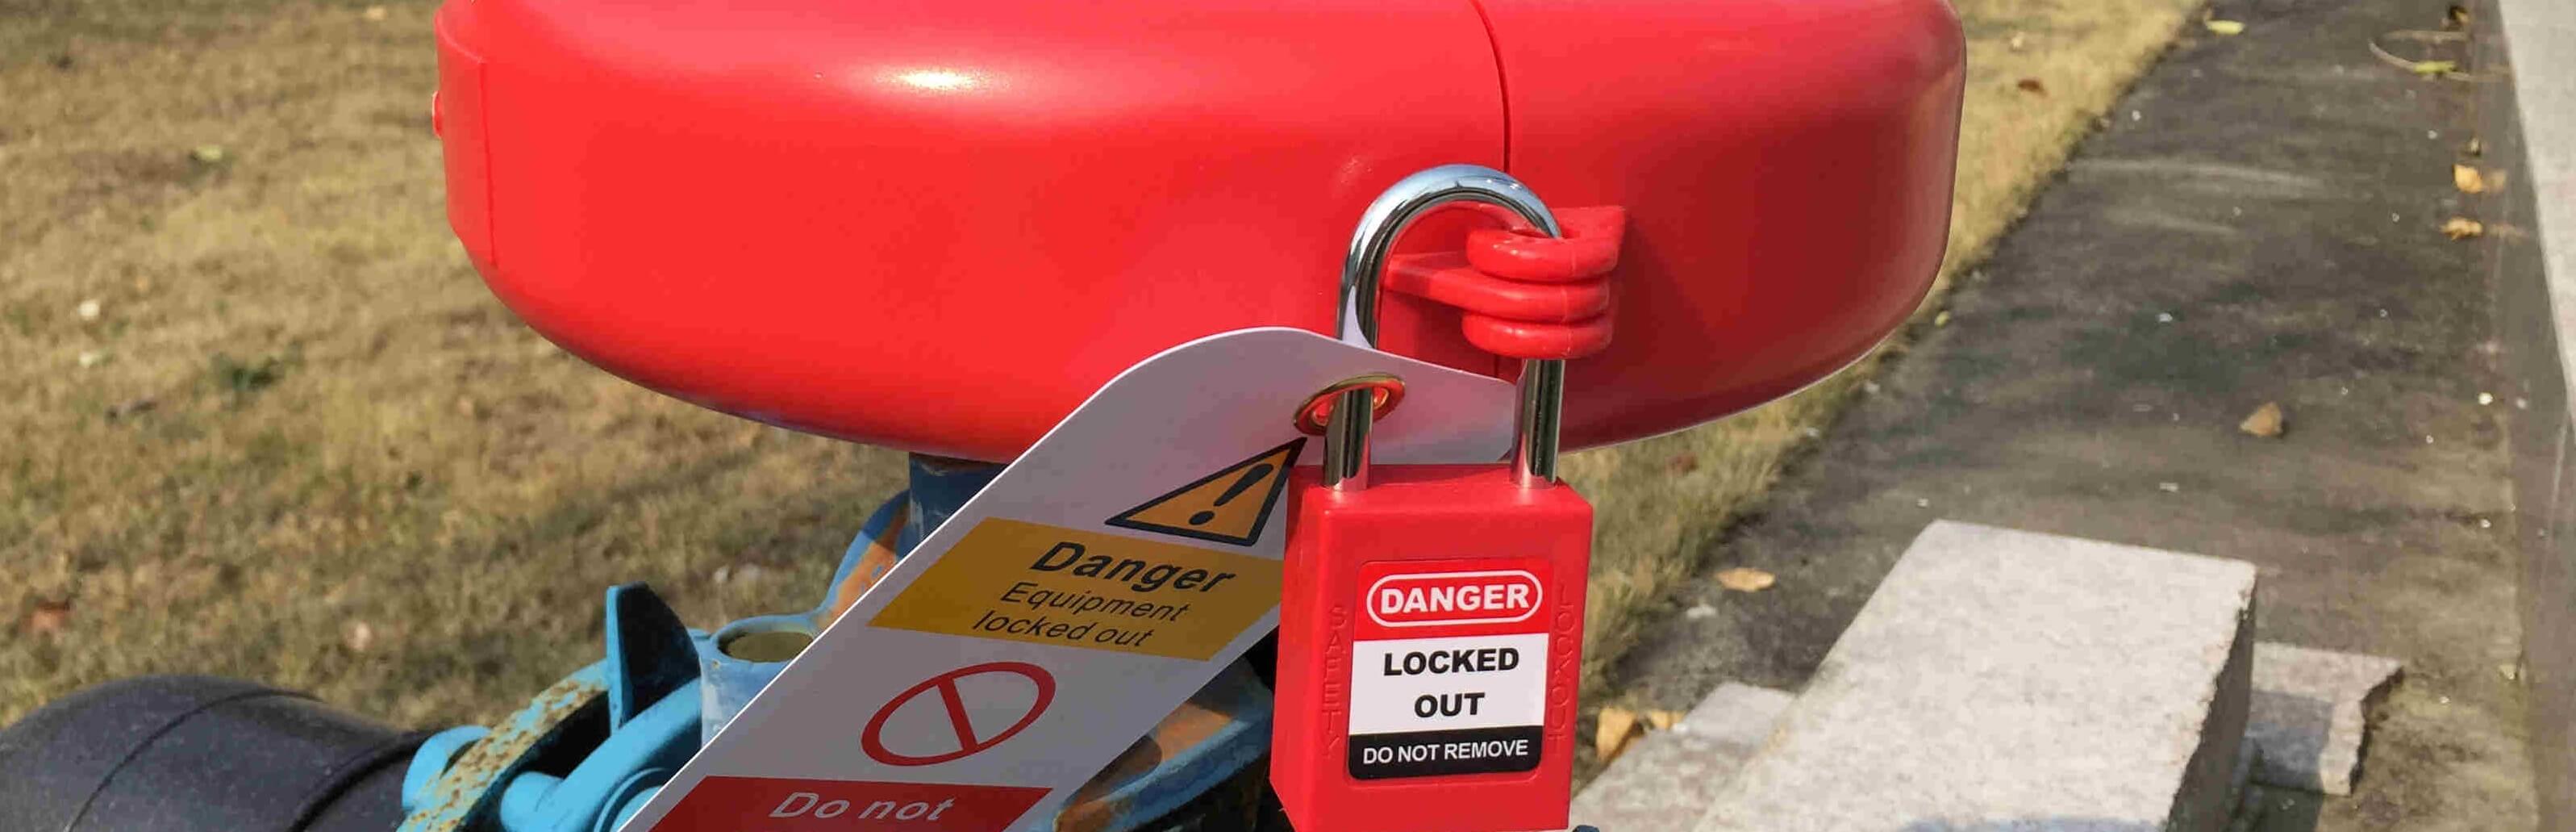 gate valve lockout cropped